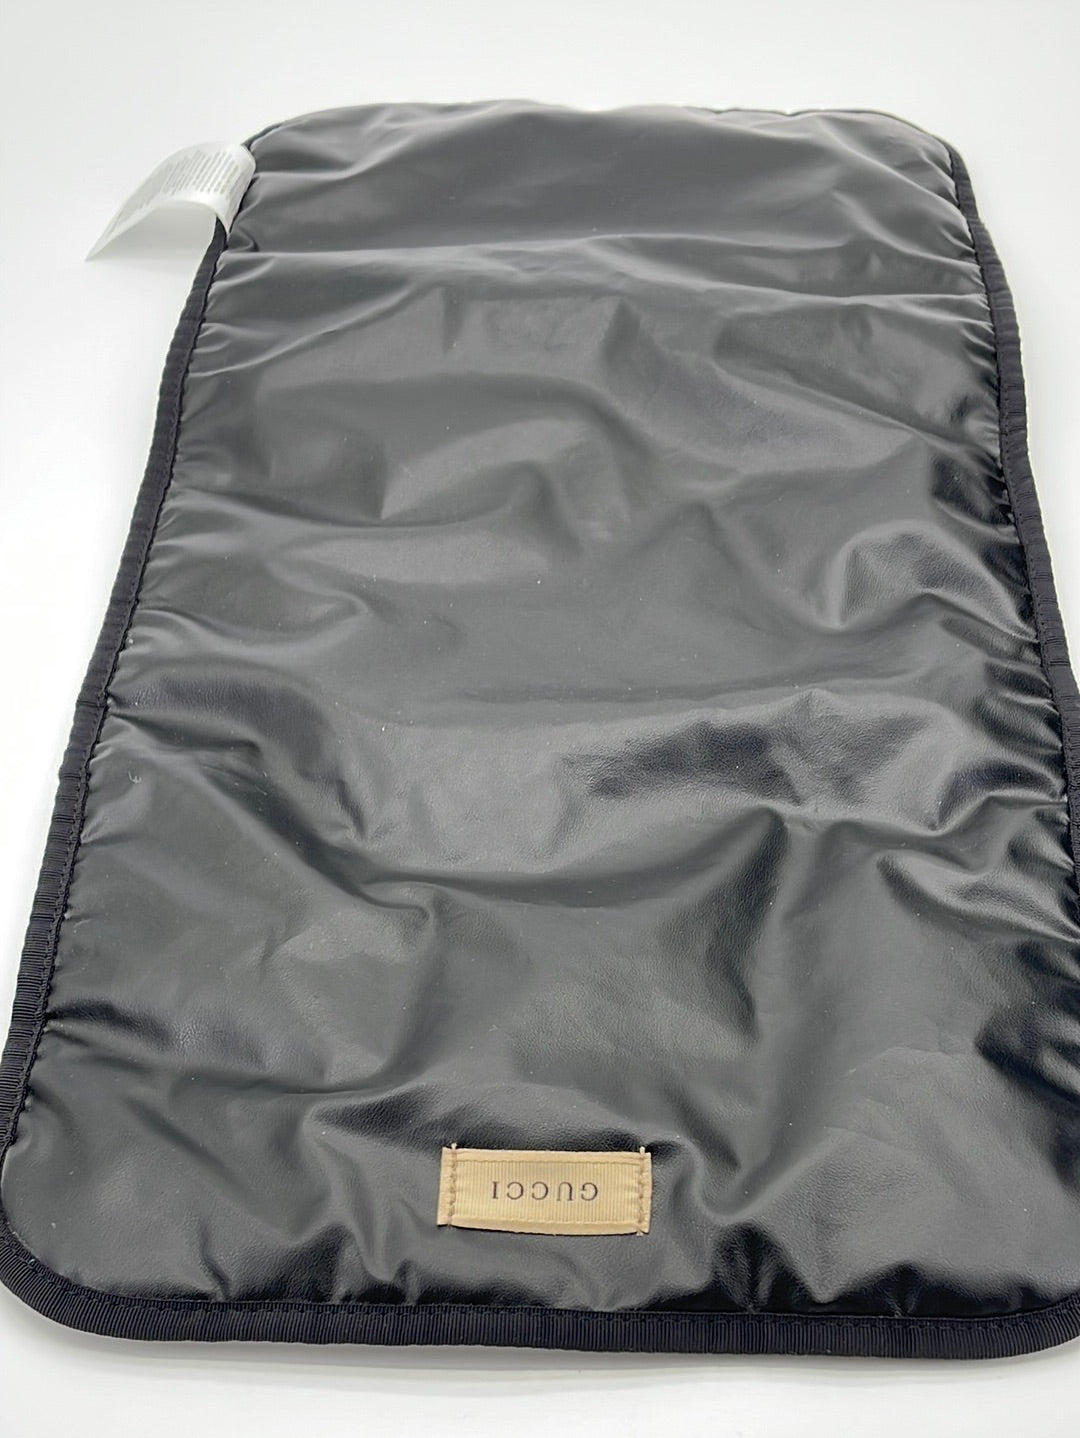 Gucci Travel Guccissima-Print Diaper Bag w/ Changing Pad